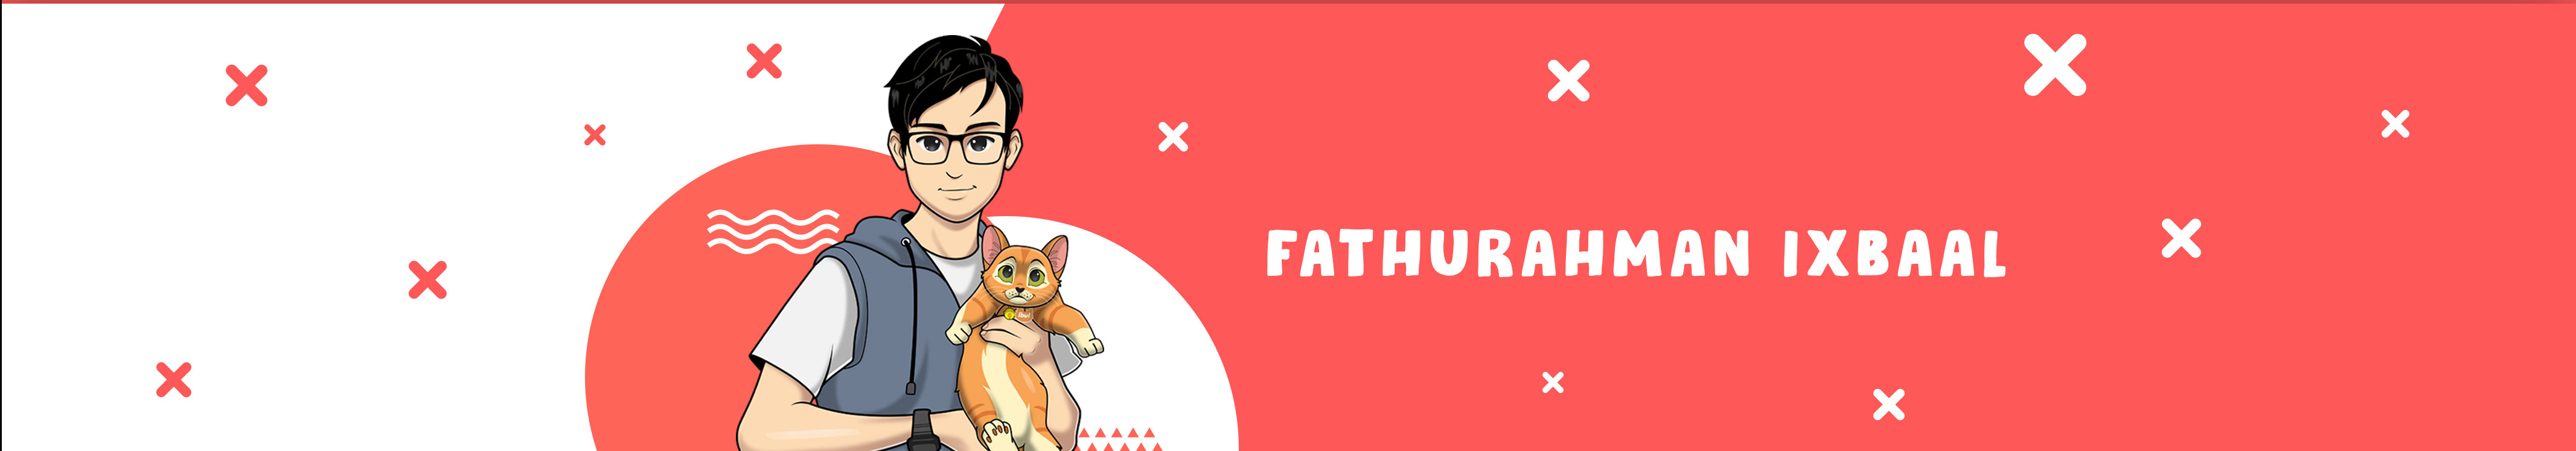 Fathurahman Ixbaal's profile banner